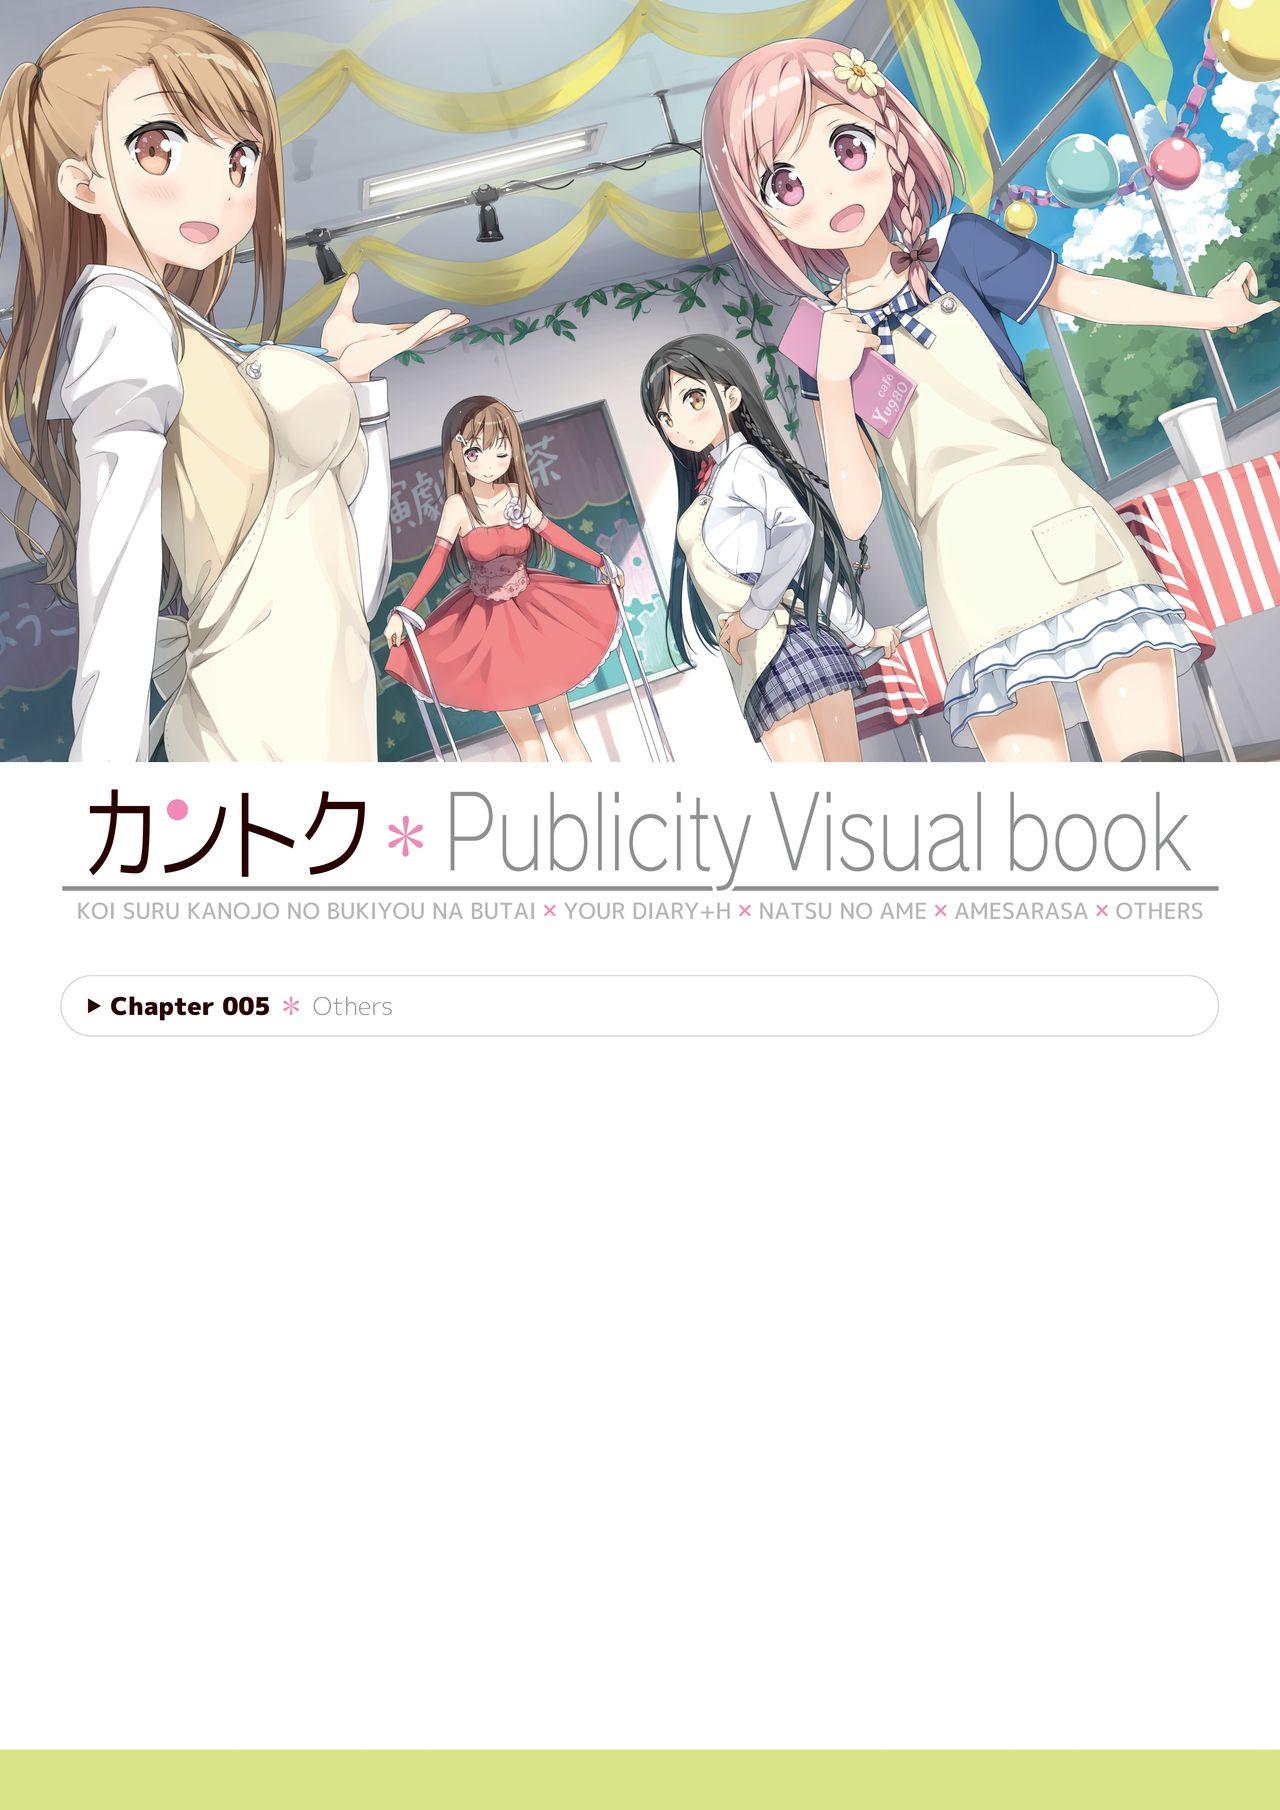 Kantoku Publicity Visual book 158